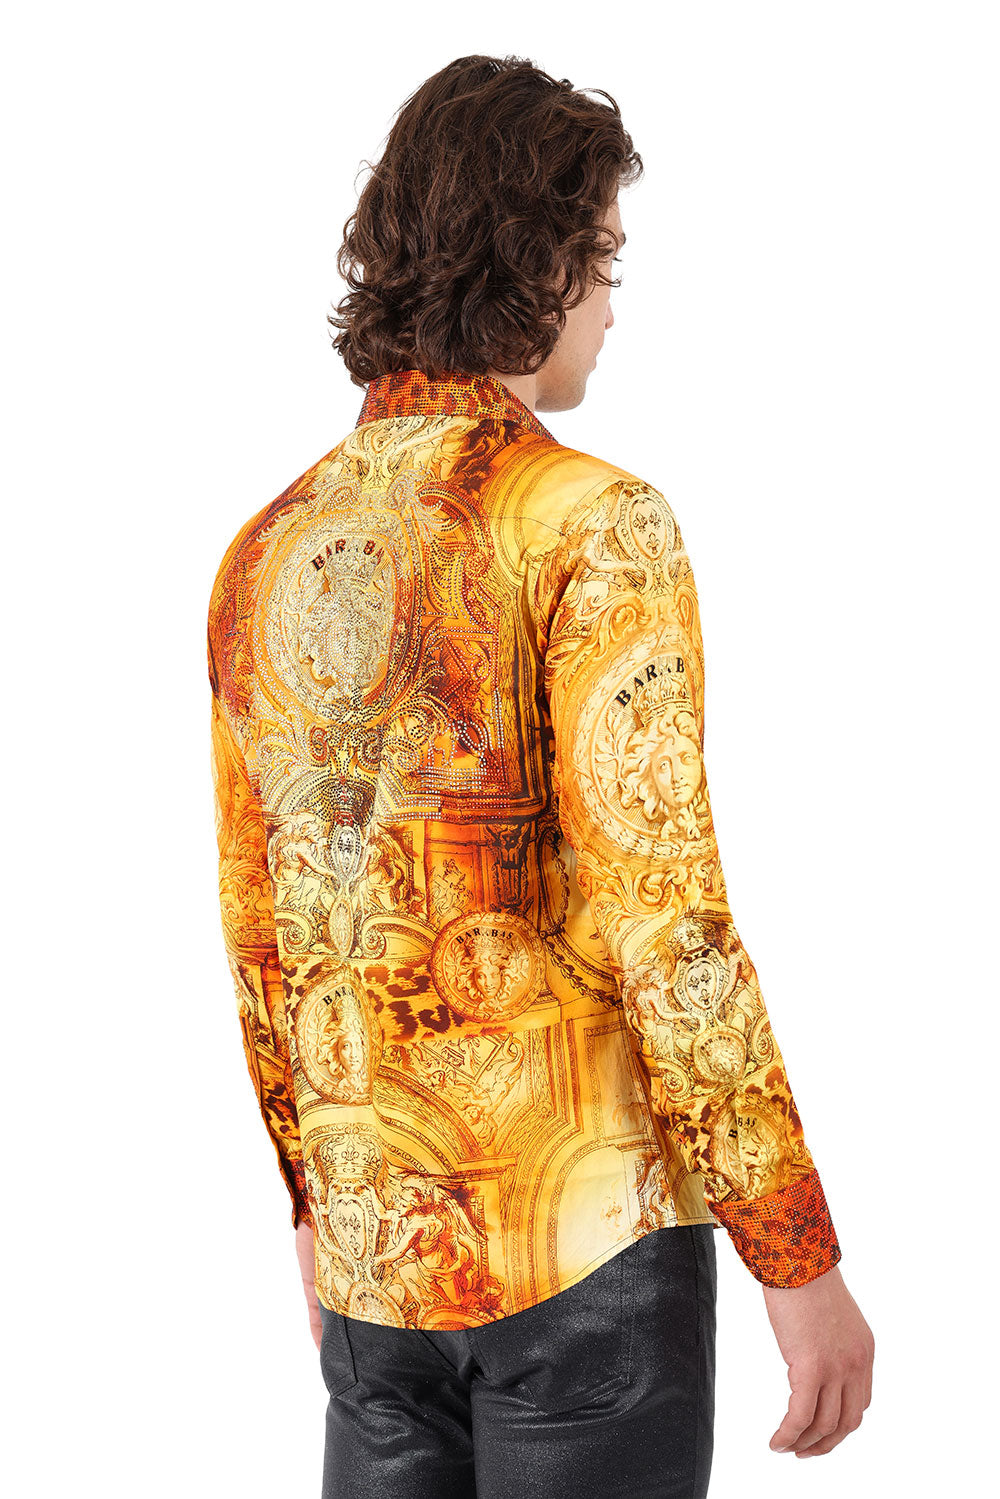 BARABAS Men's Rhinestone Medusa Floral Angeles Baroque Shirt 2SPR220 Gold